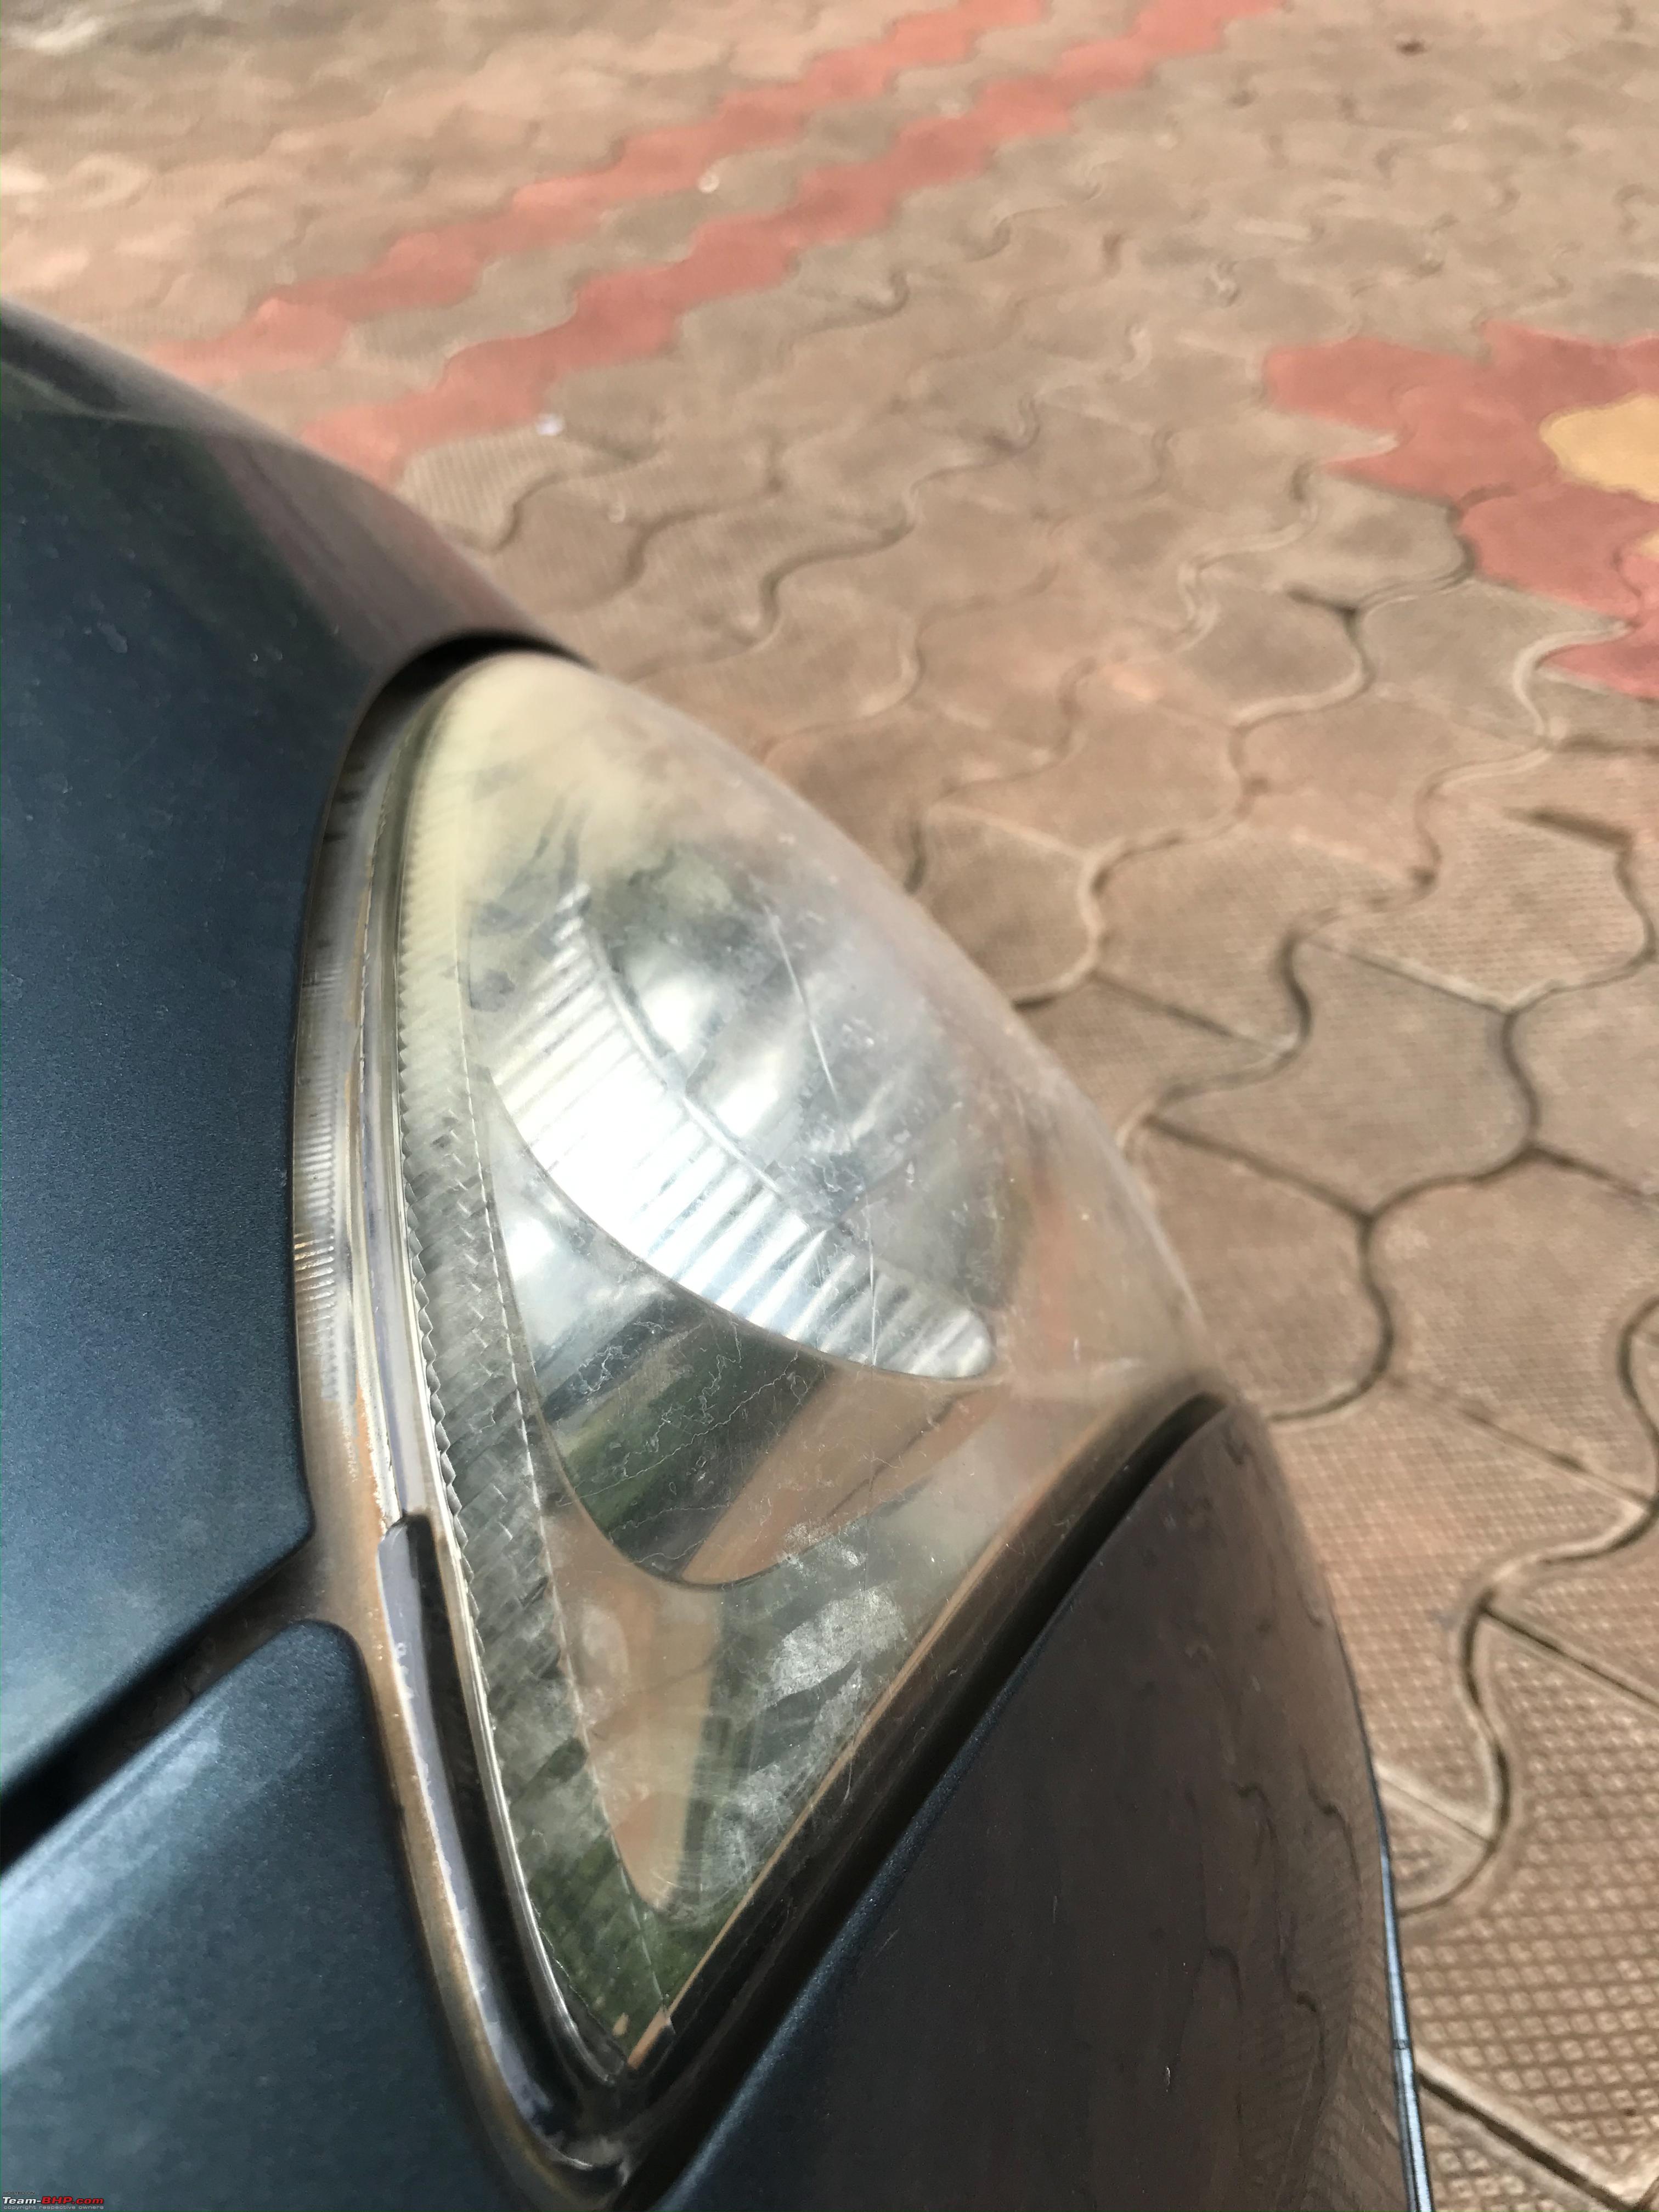 Meguiar's - Unfortunatelyclear plastic headlights can start to